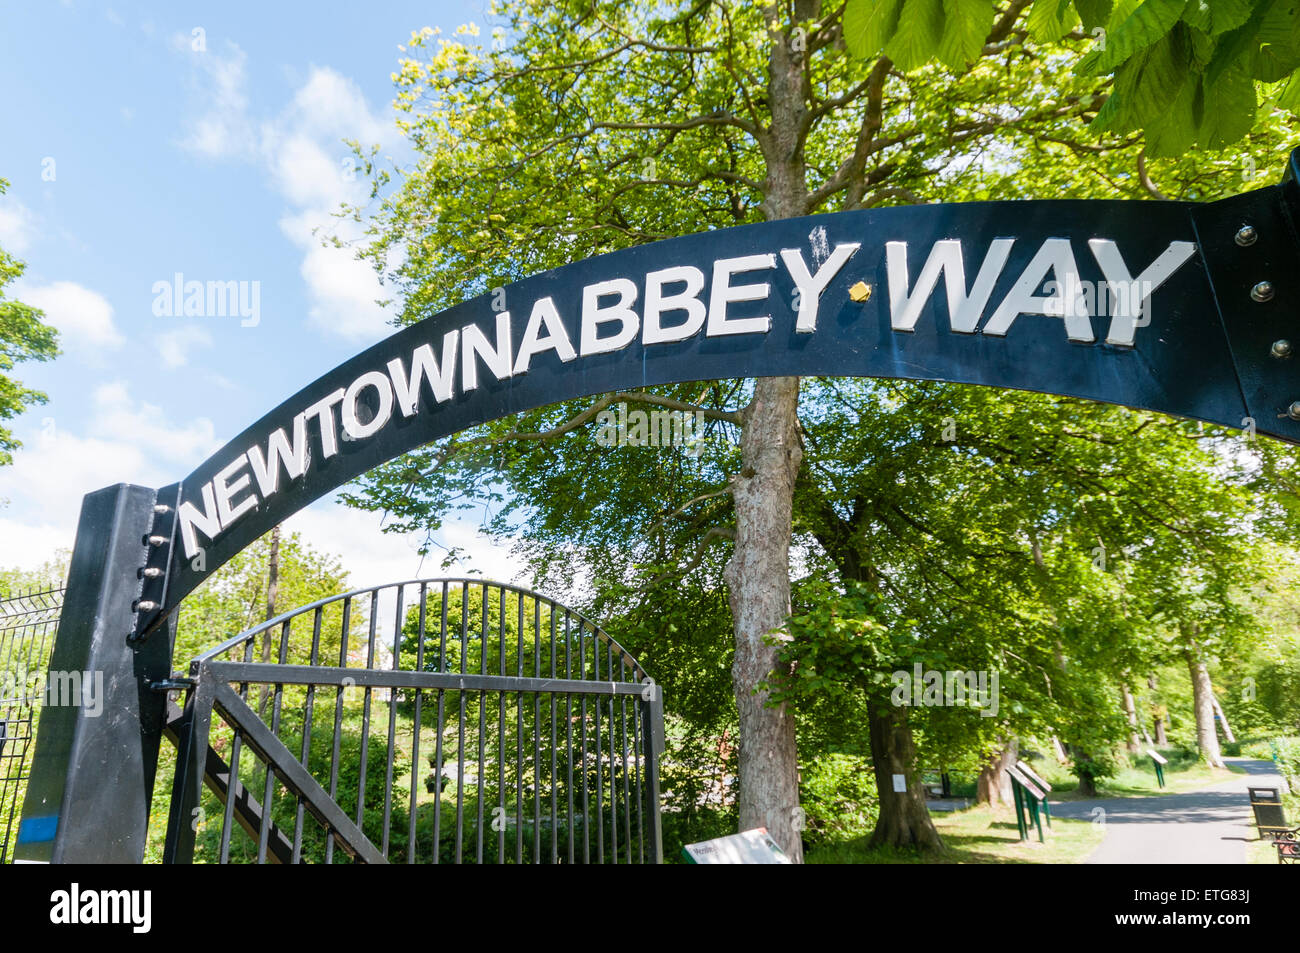 Newtownabbey Way walking route in County Antrim, Northern Ireland Stock Photo